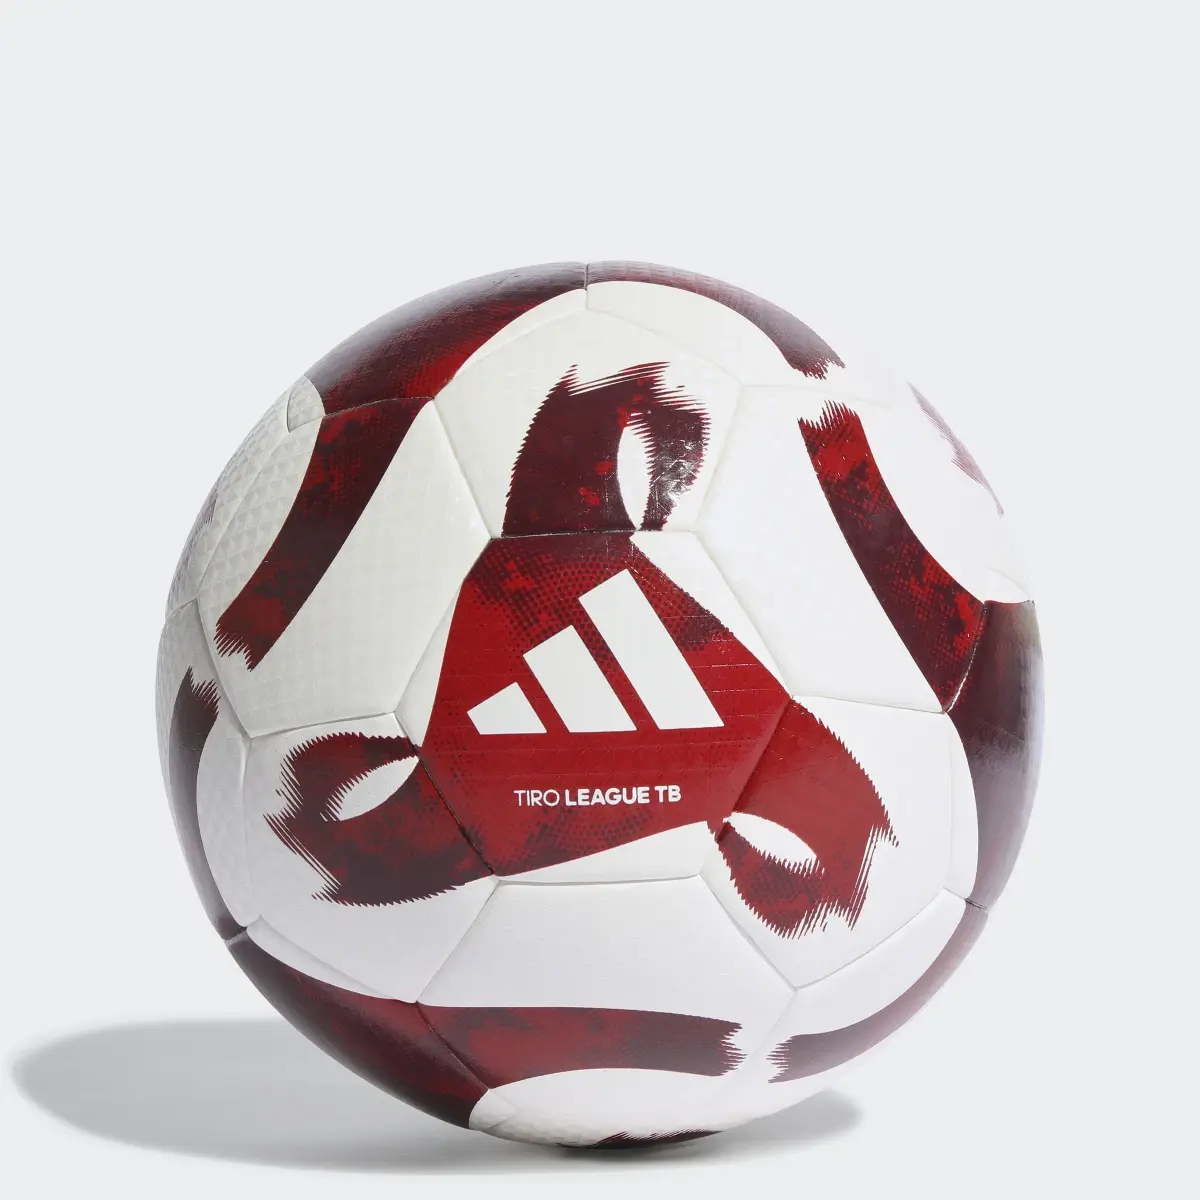 Adidas Tiro League Thermally Bonded Ball. 1